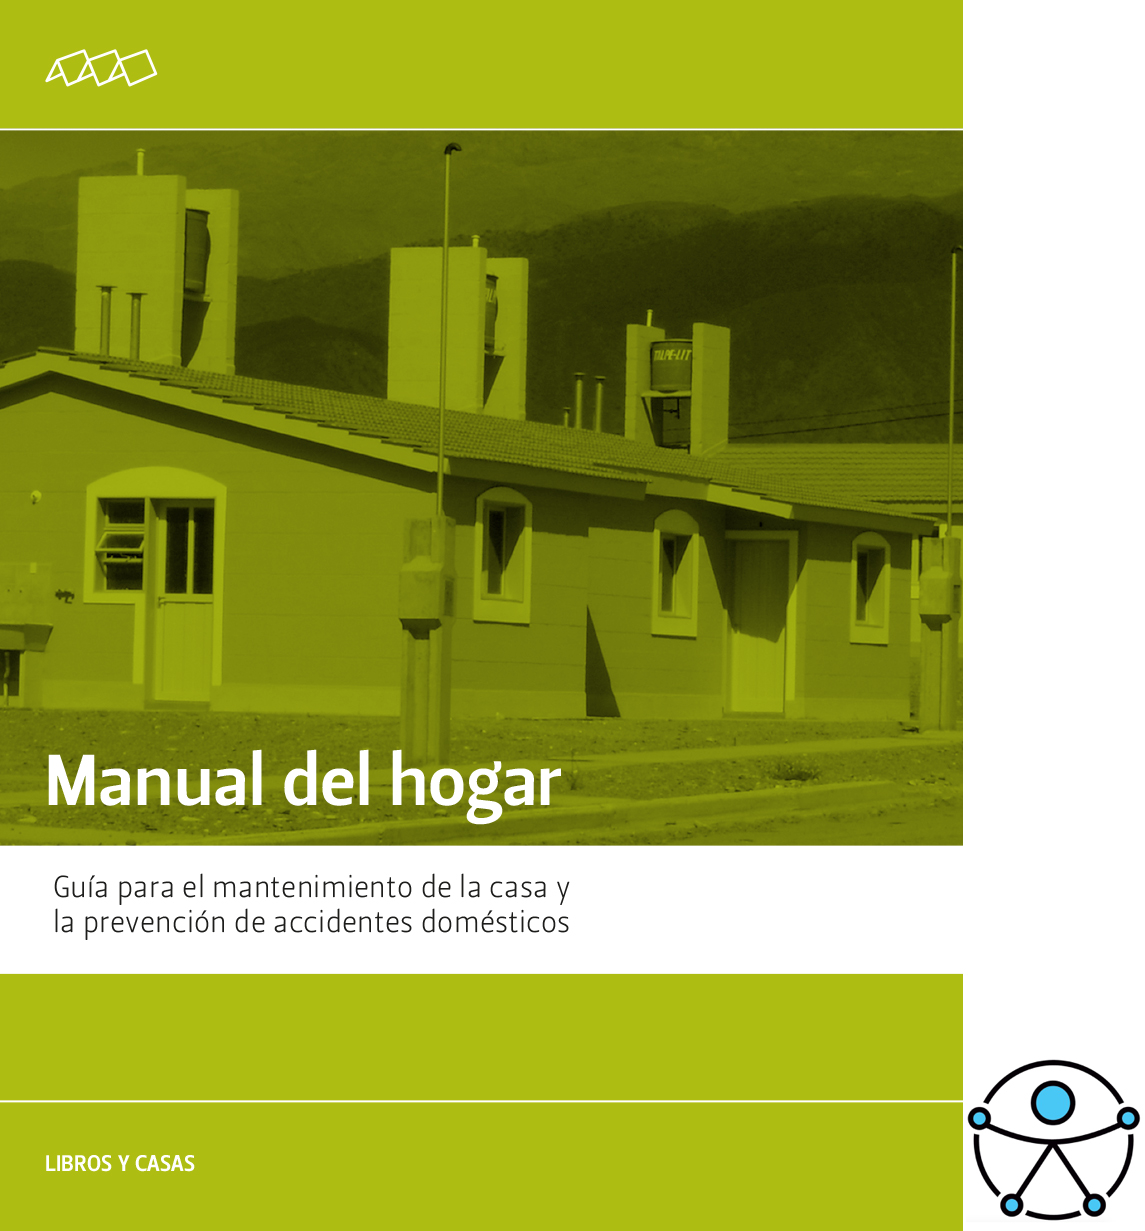 Manual del Hogar. Formato .epub y .rtf